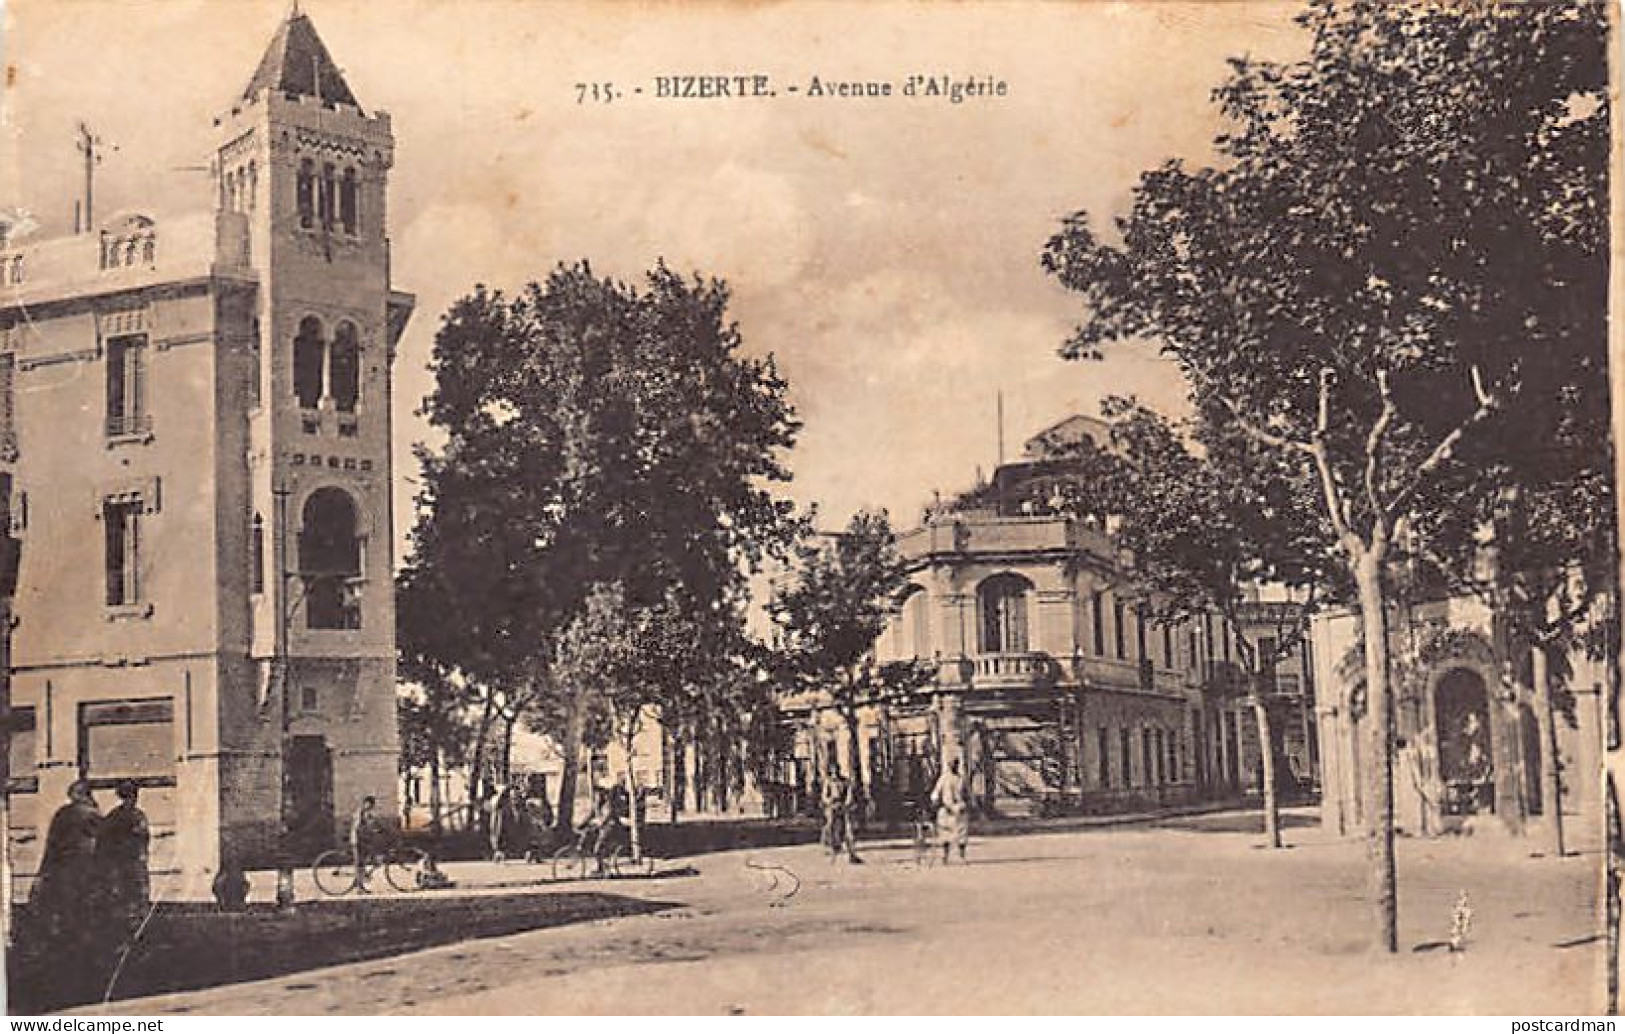 Tunisie - BIZERTE - Avenue D'Algérie - Ed. EMT 715 - Tunisia